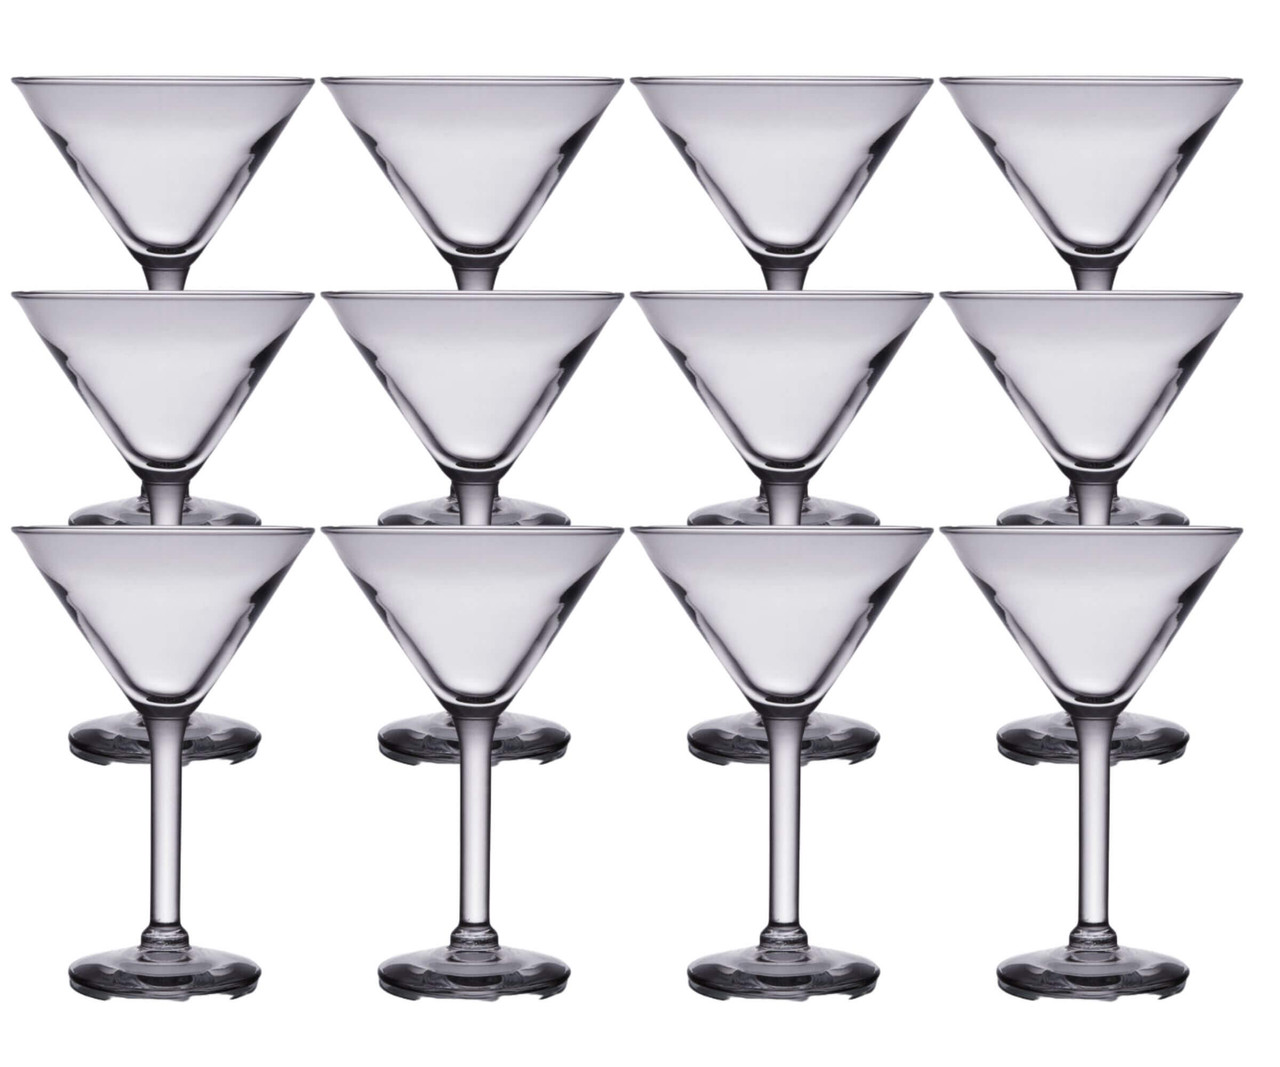 Libbey Stemless Martini Glasses (12/Case)